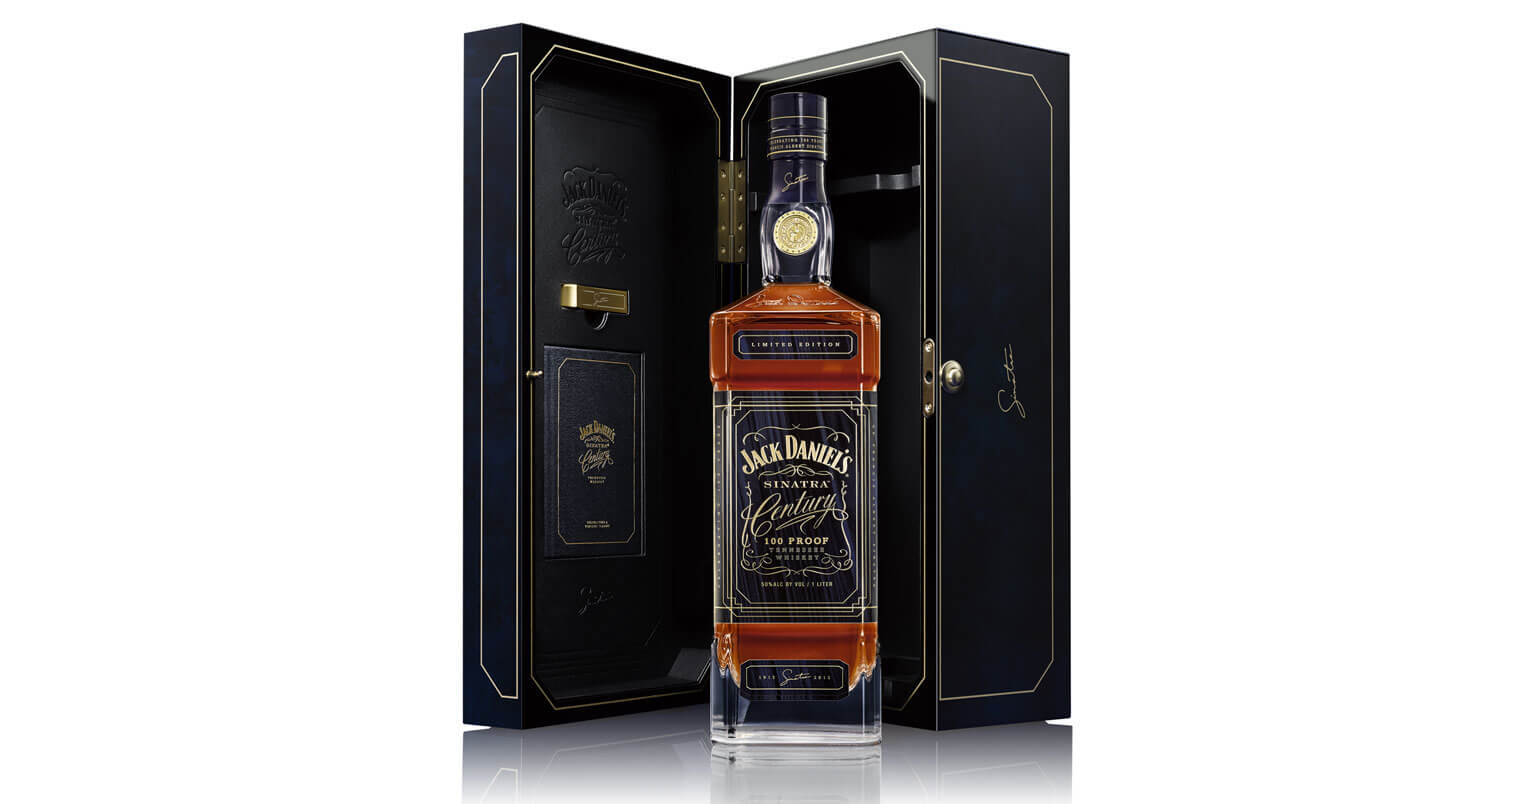 Jack Daniel's Sinatra Century bottle and package